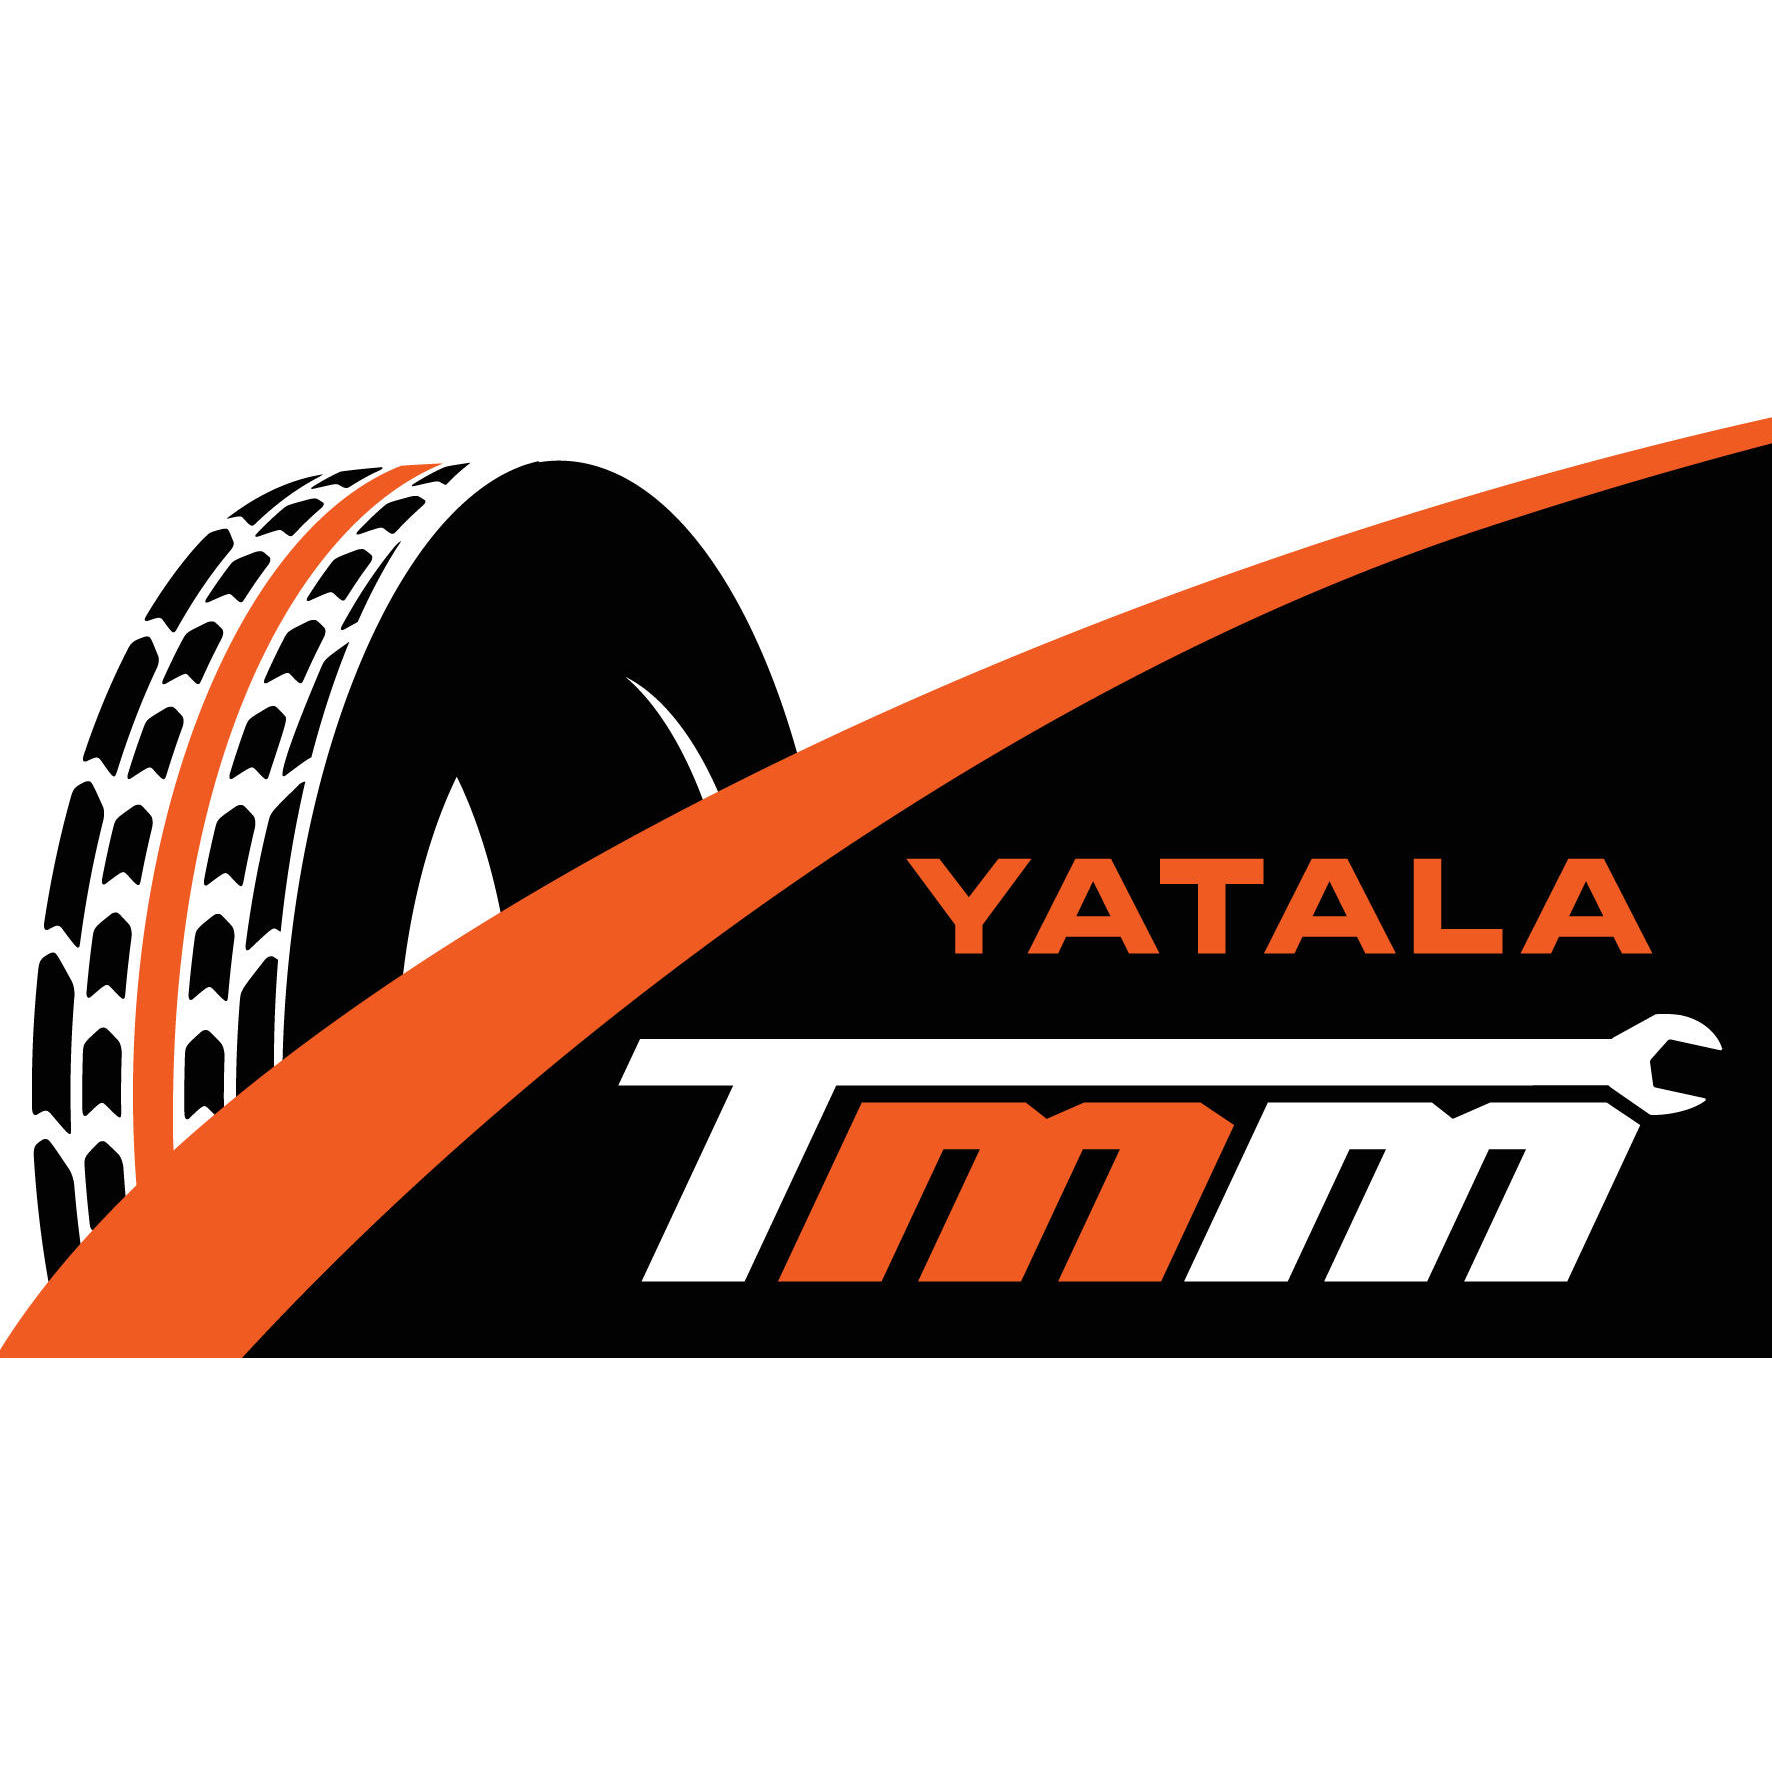 Yatala Tyres Mufflers and Mechanical Stapylton (07) 3807 8778